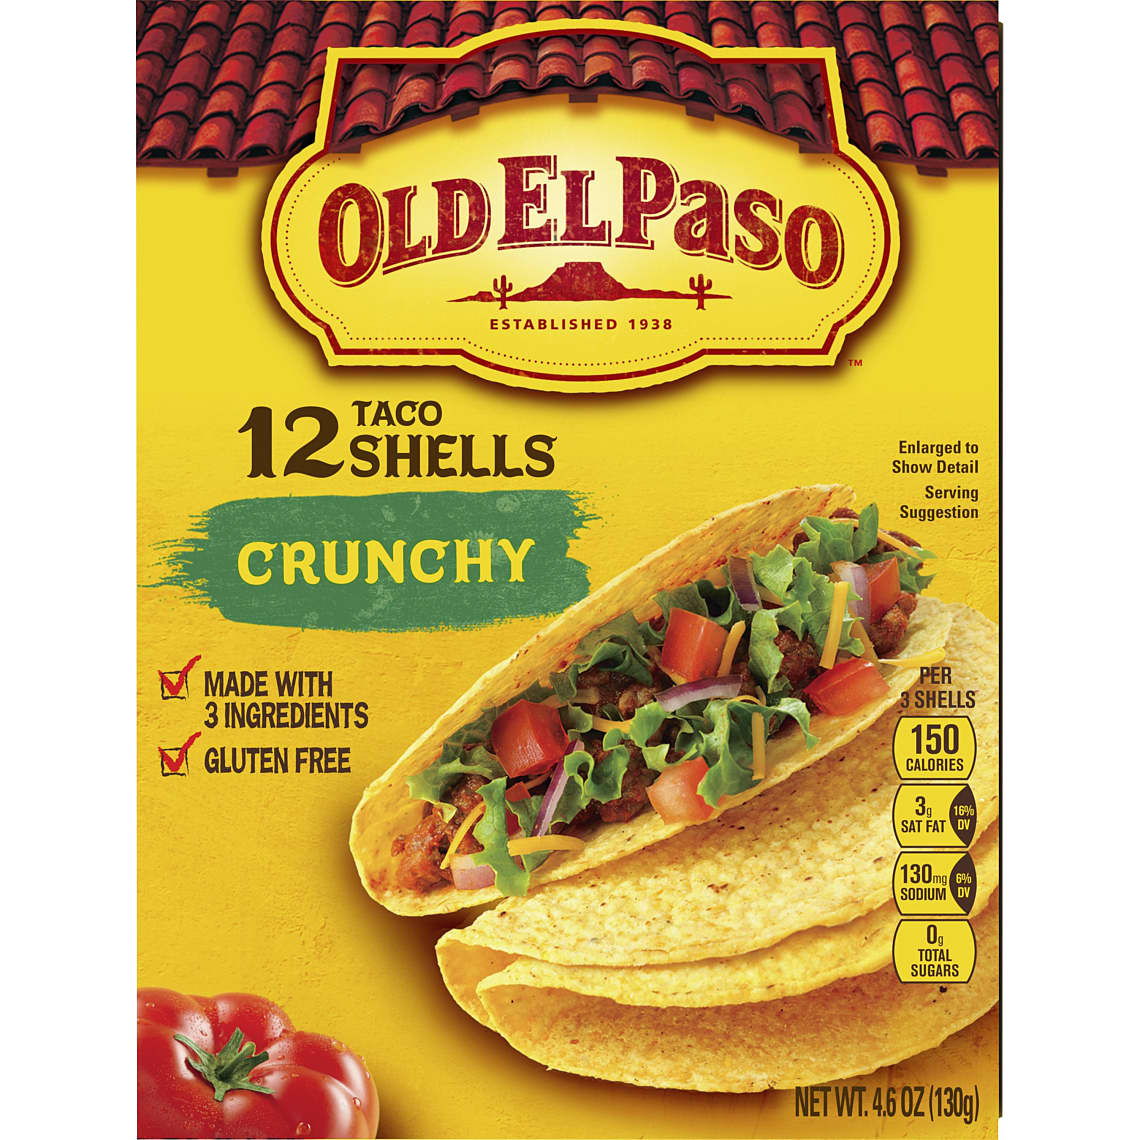 Crunchy Taco Shells El - Old - Paso Free Classic Gluten